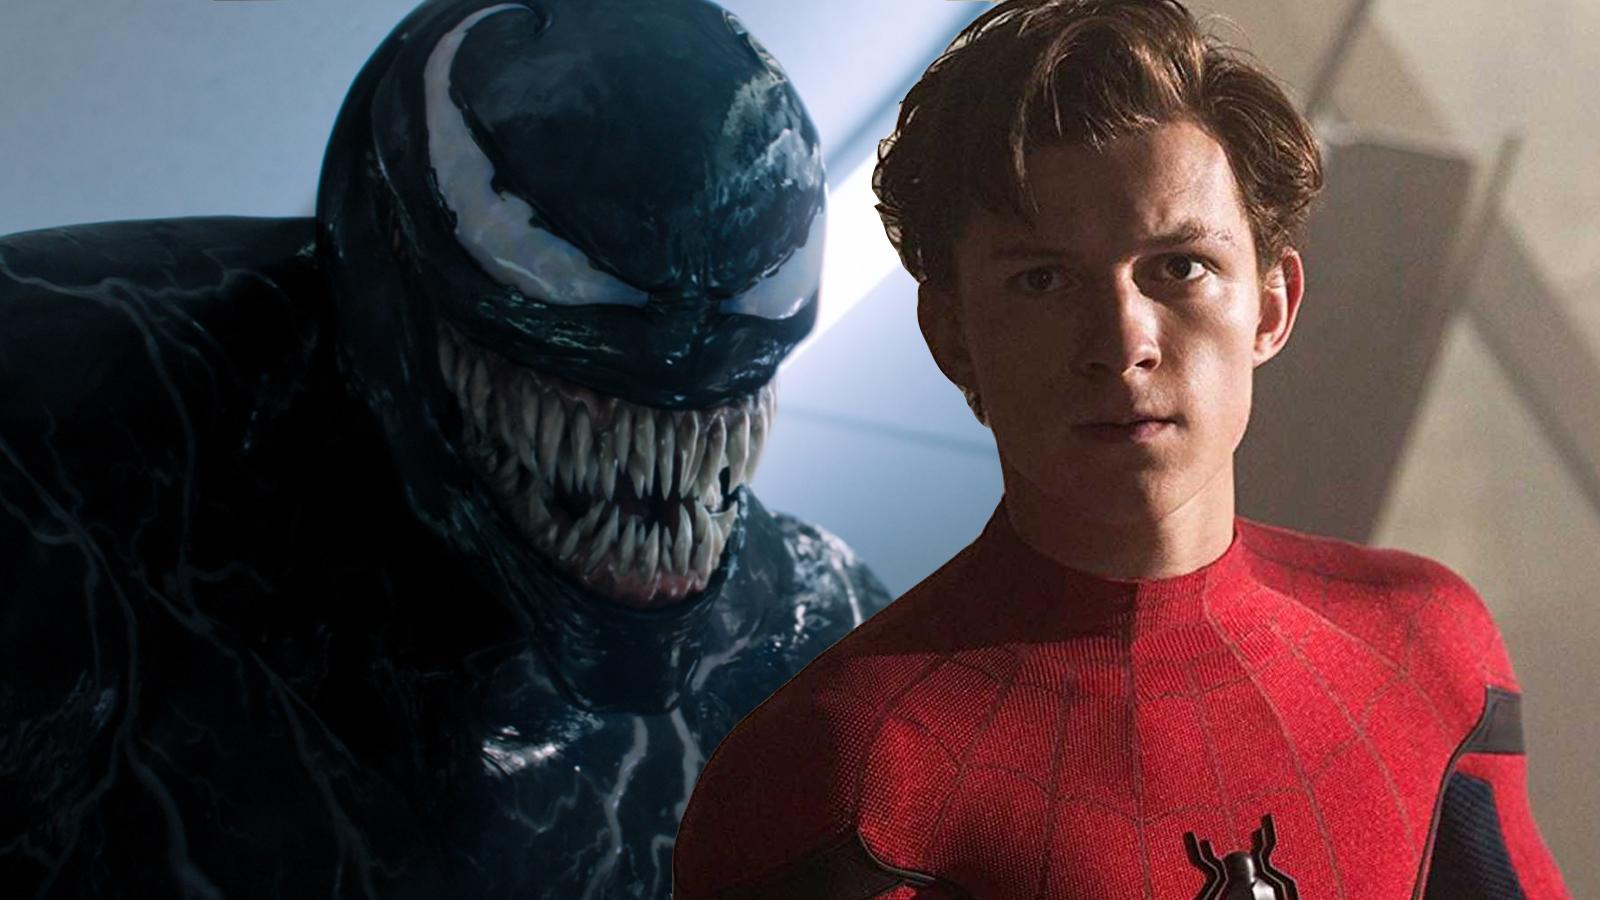 Spider-Man 4 leaks reveal “big plan” to introduce Venom - Dexerto